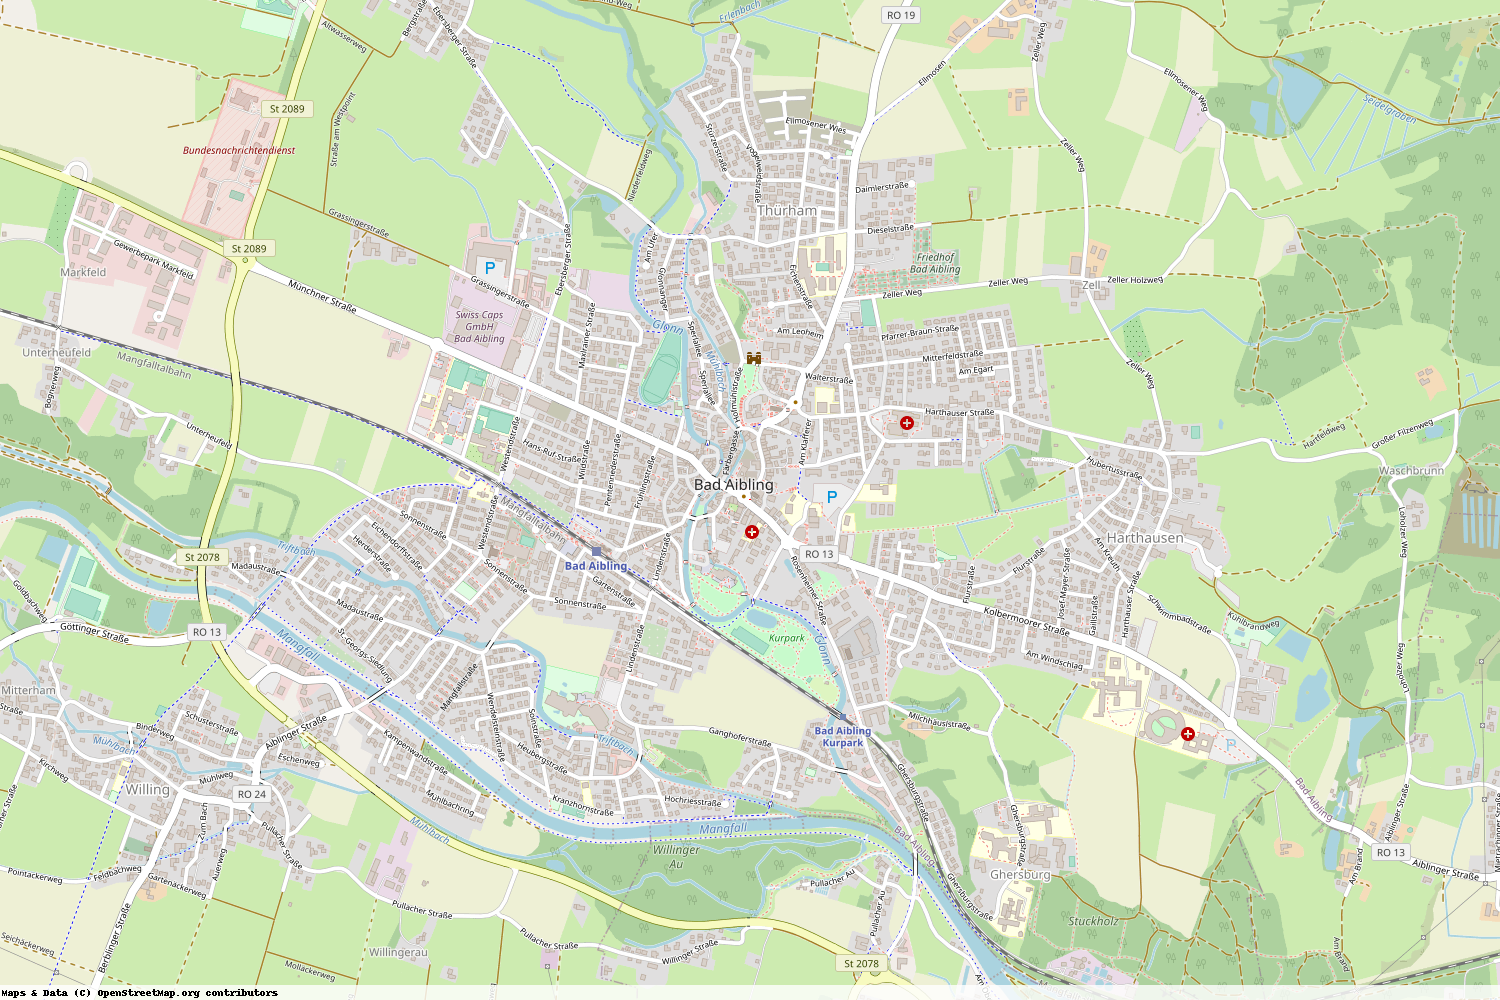 Ist gerade Stromausfall in Bayern - Rosenheim - Bad Aibling?